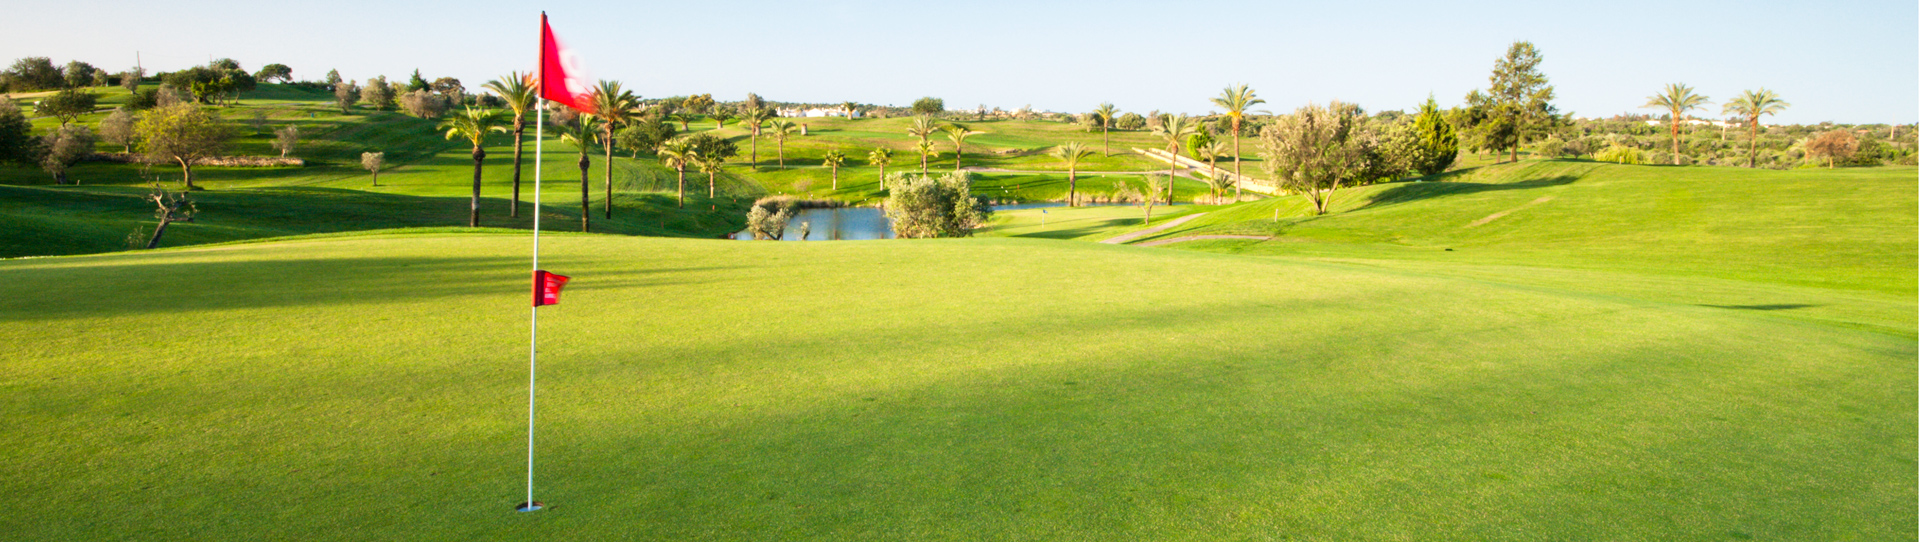 Portugal golf courses - Gramacho Golf Course - Photo 2